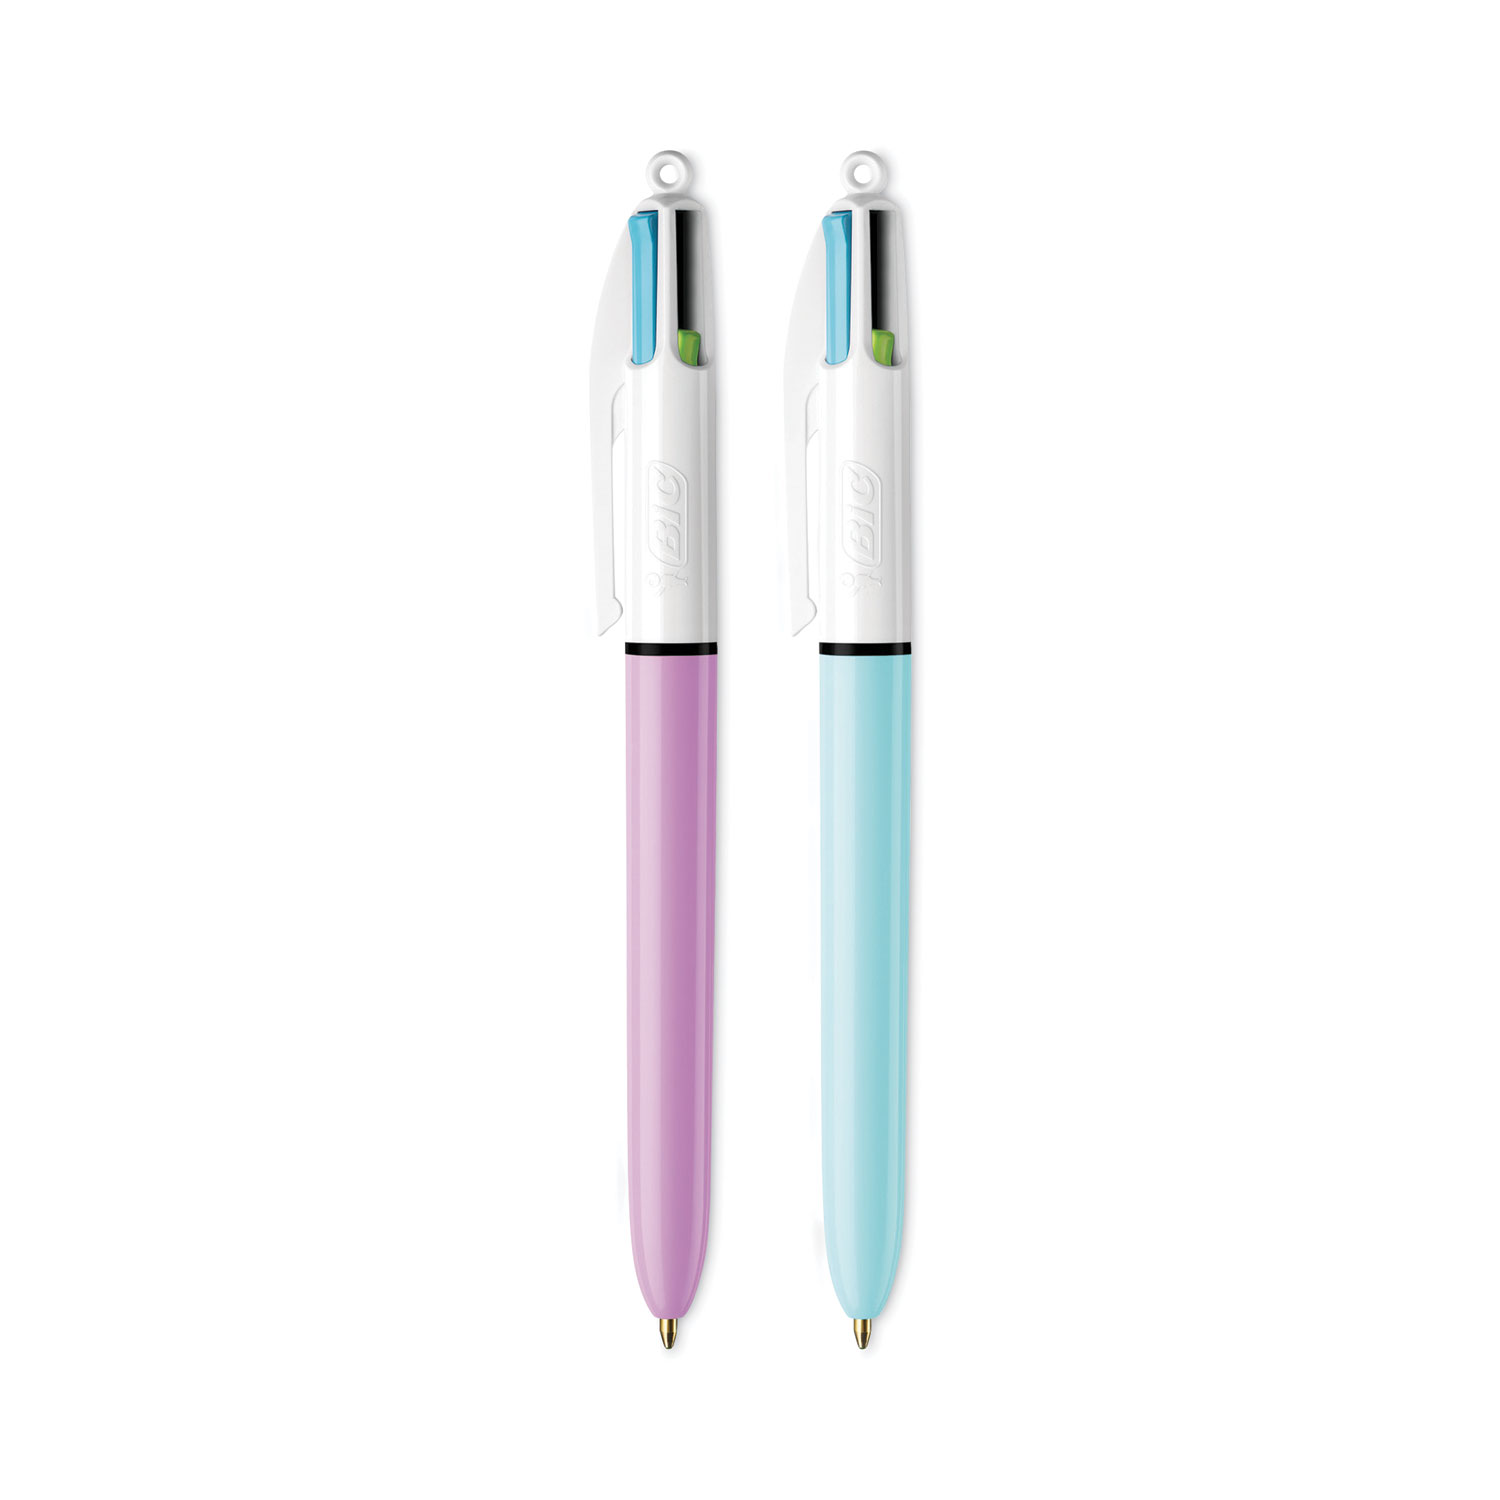 BIC 4 Color Retractable Ballpoint Pens Medium Point 1.0 mm